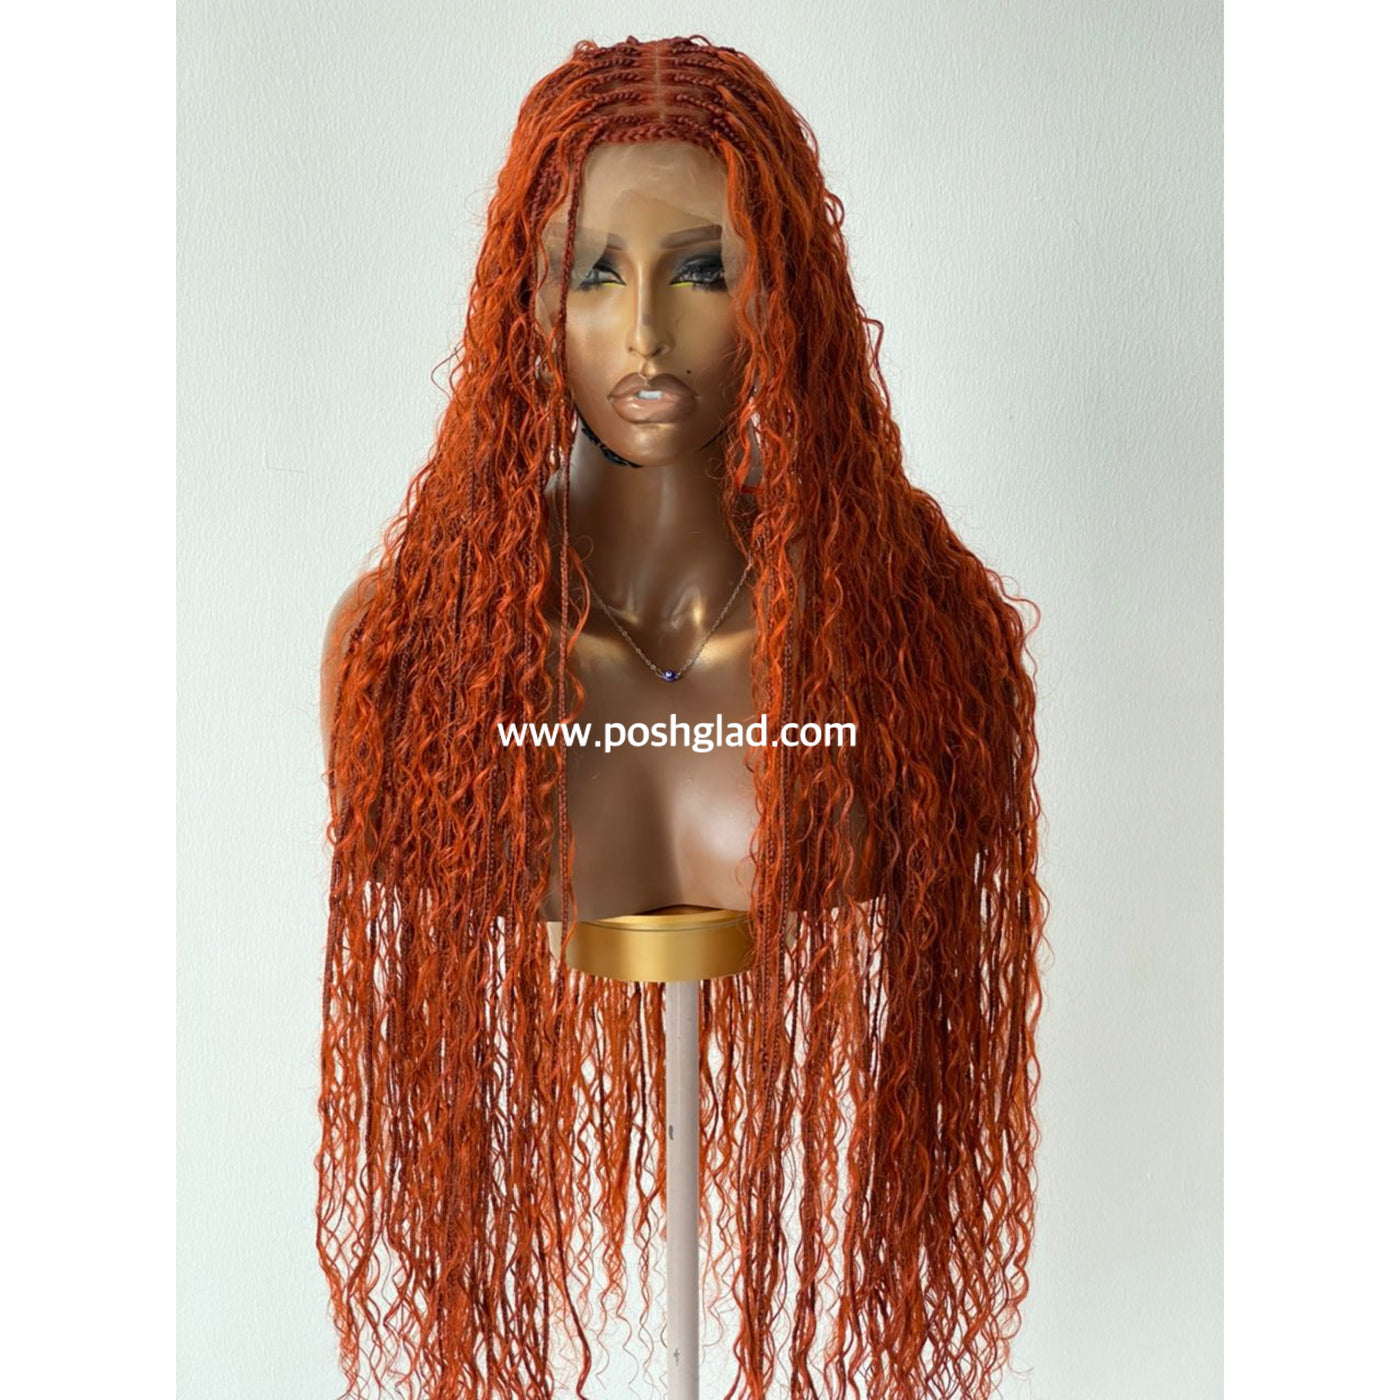 Bohemian Knotless - TARA COPPER RED (100% Human Hair) Poshglad Braided Wigs Bohemian Knotless Braid Wig